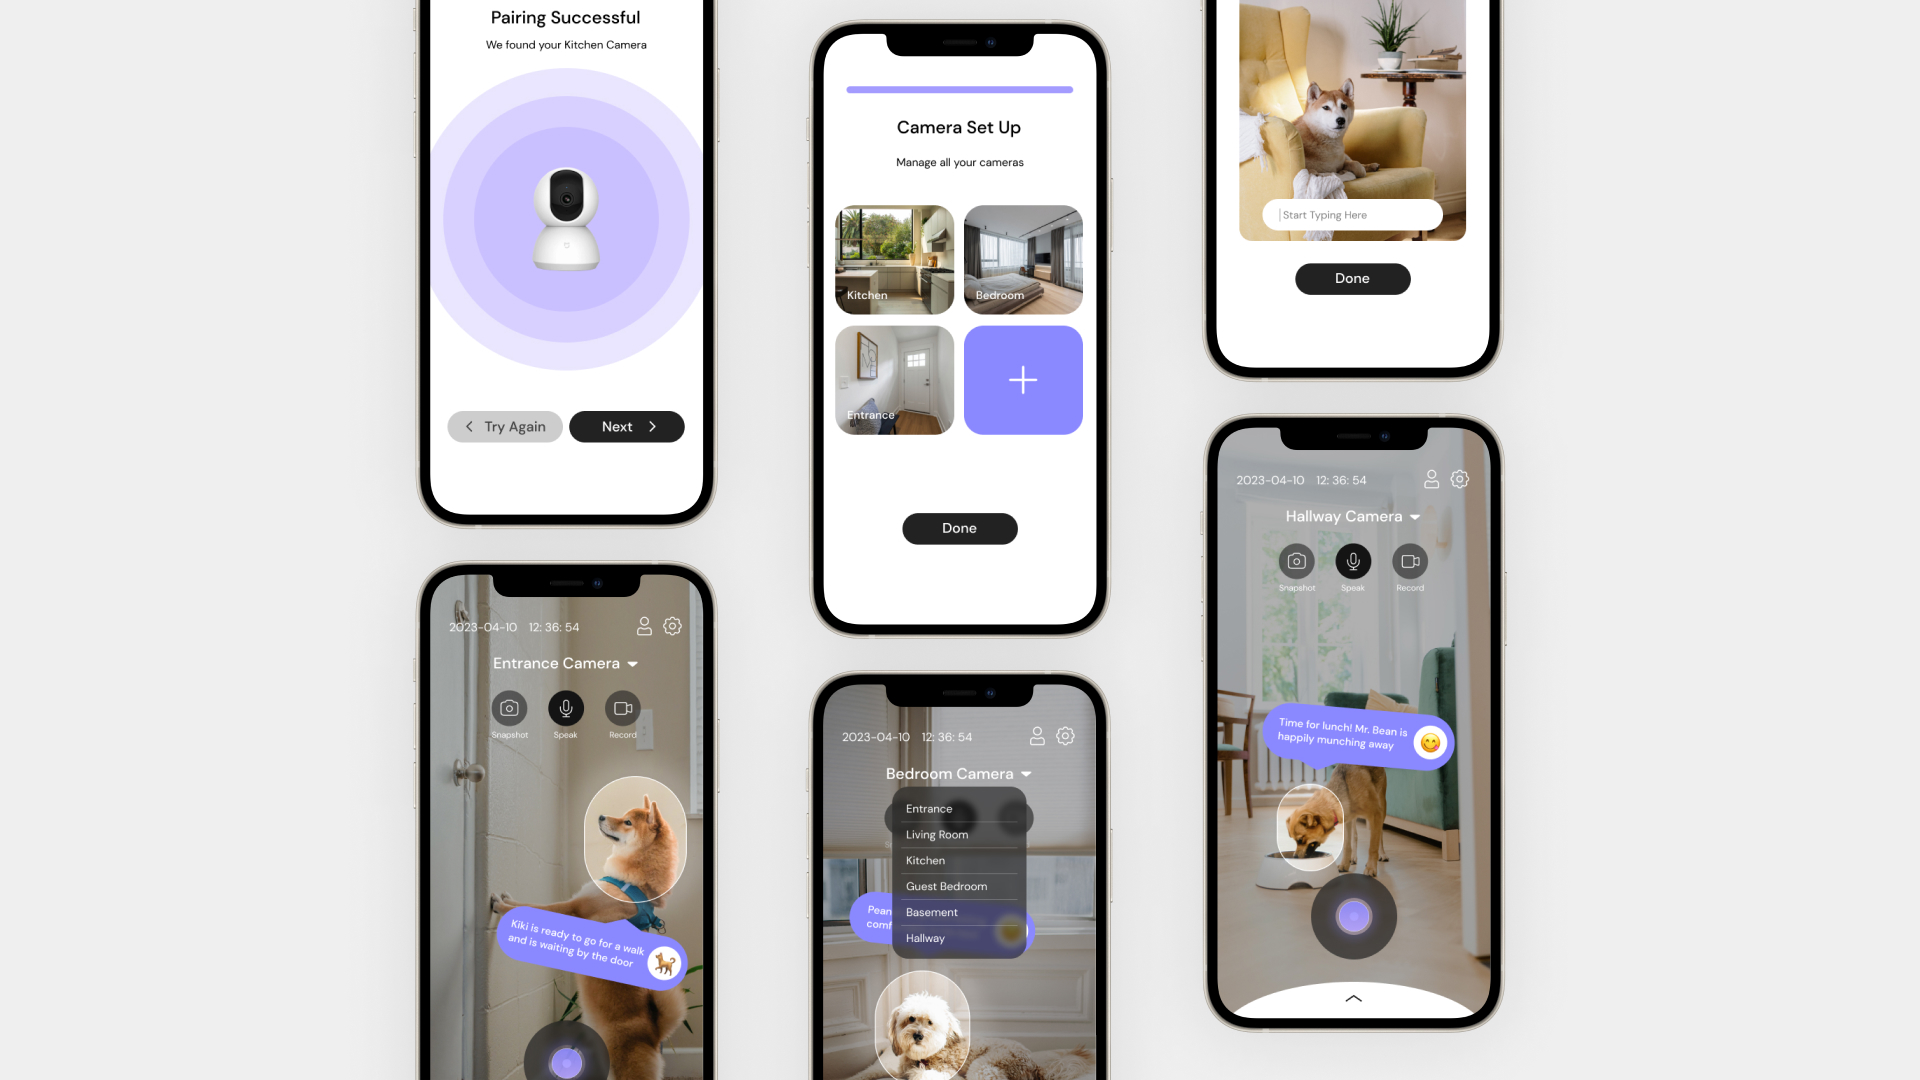 6 iPhone screens of a dog surveillance app.